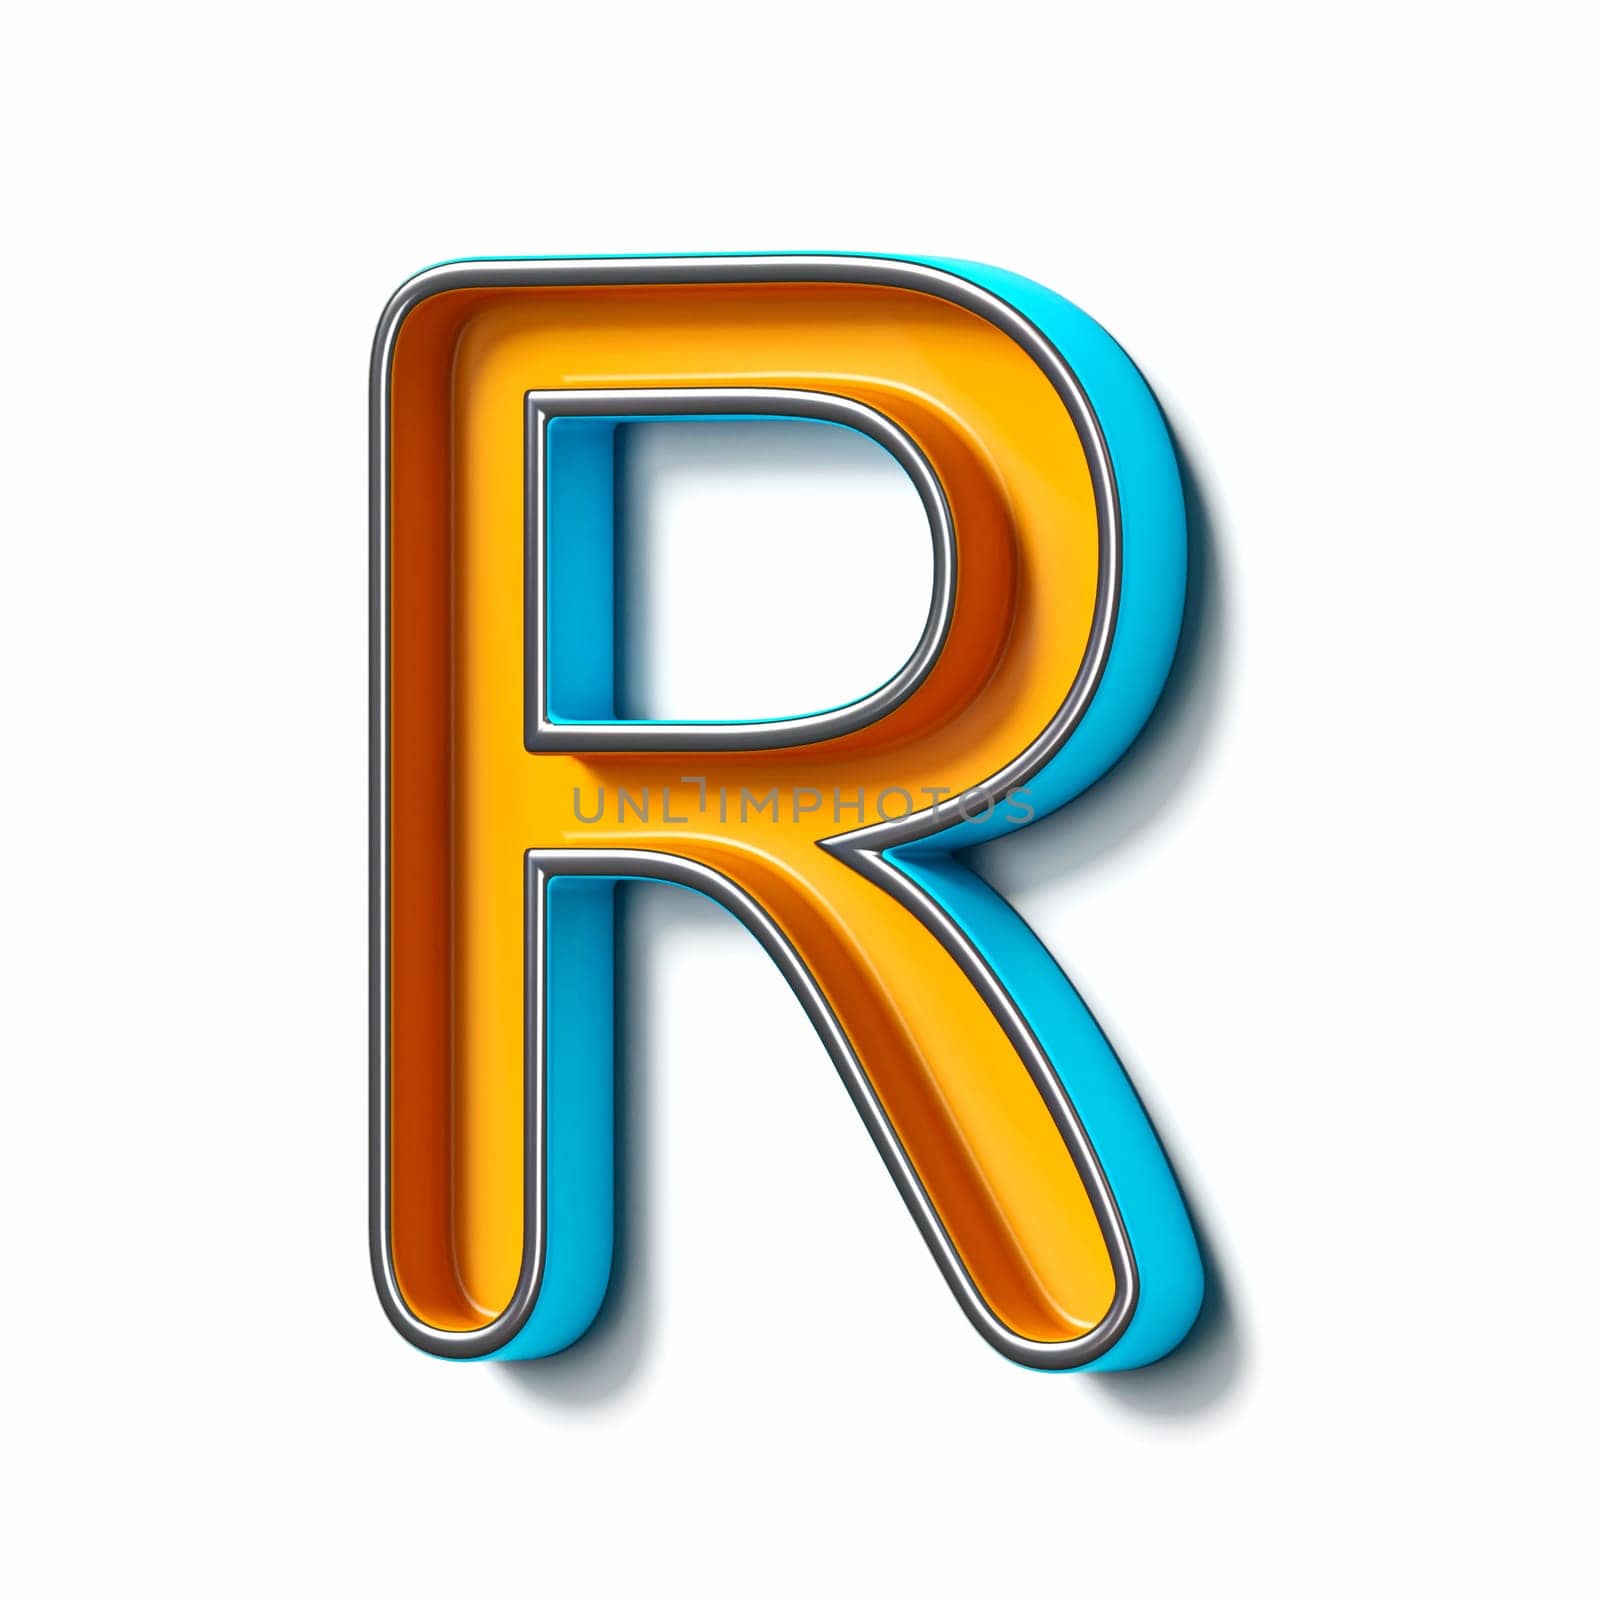 Orange blue thin metal font Letter R 3D rendering illustration isolated on white background